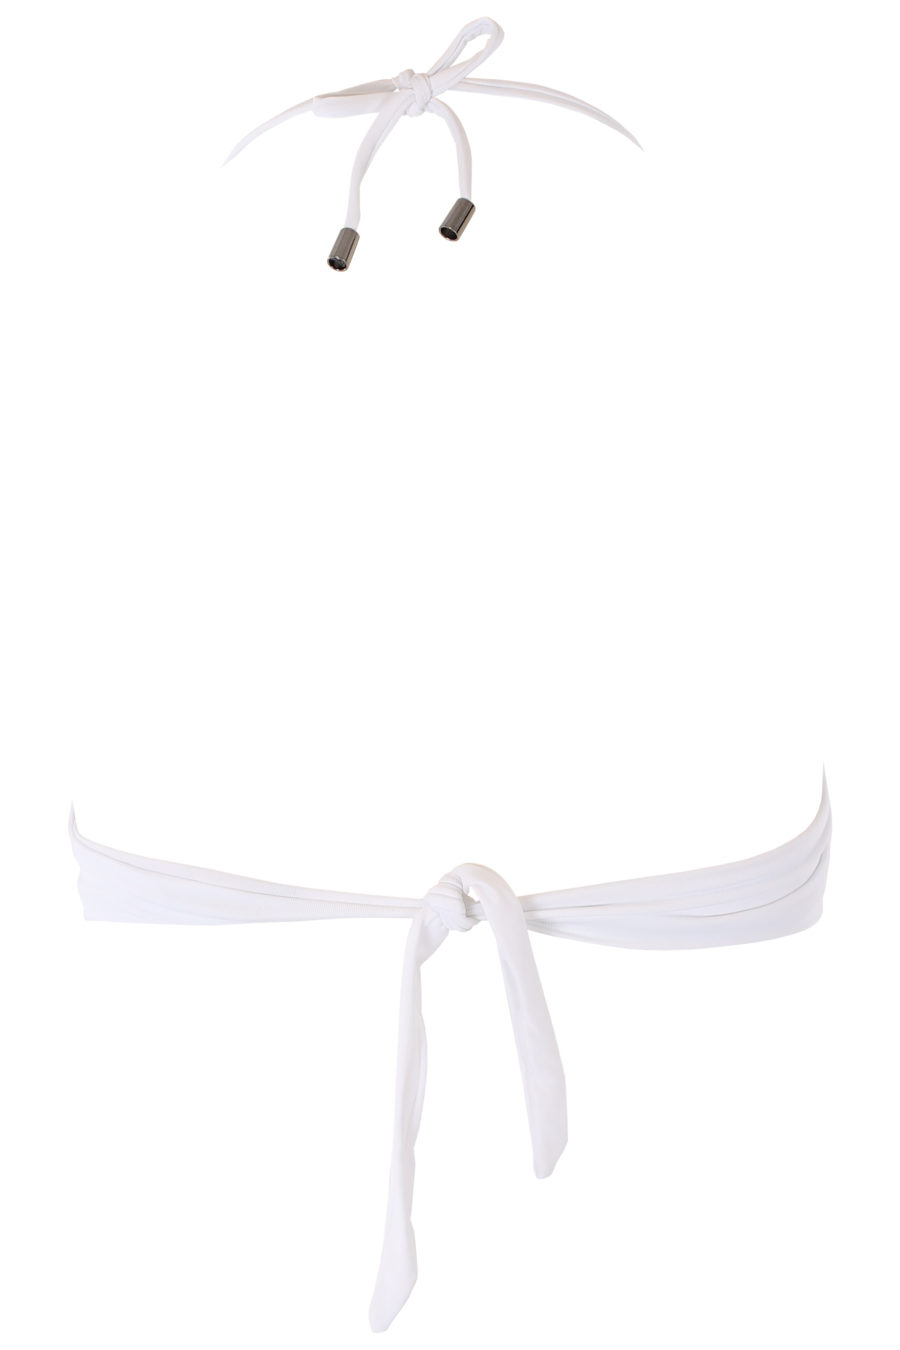 Haut de bikini droit blanc bicolore avec logo noir - IMG 1209